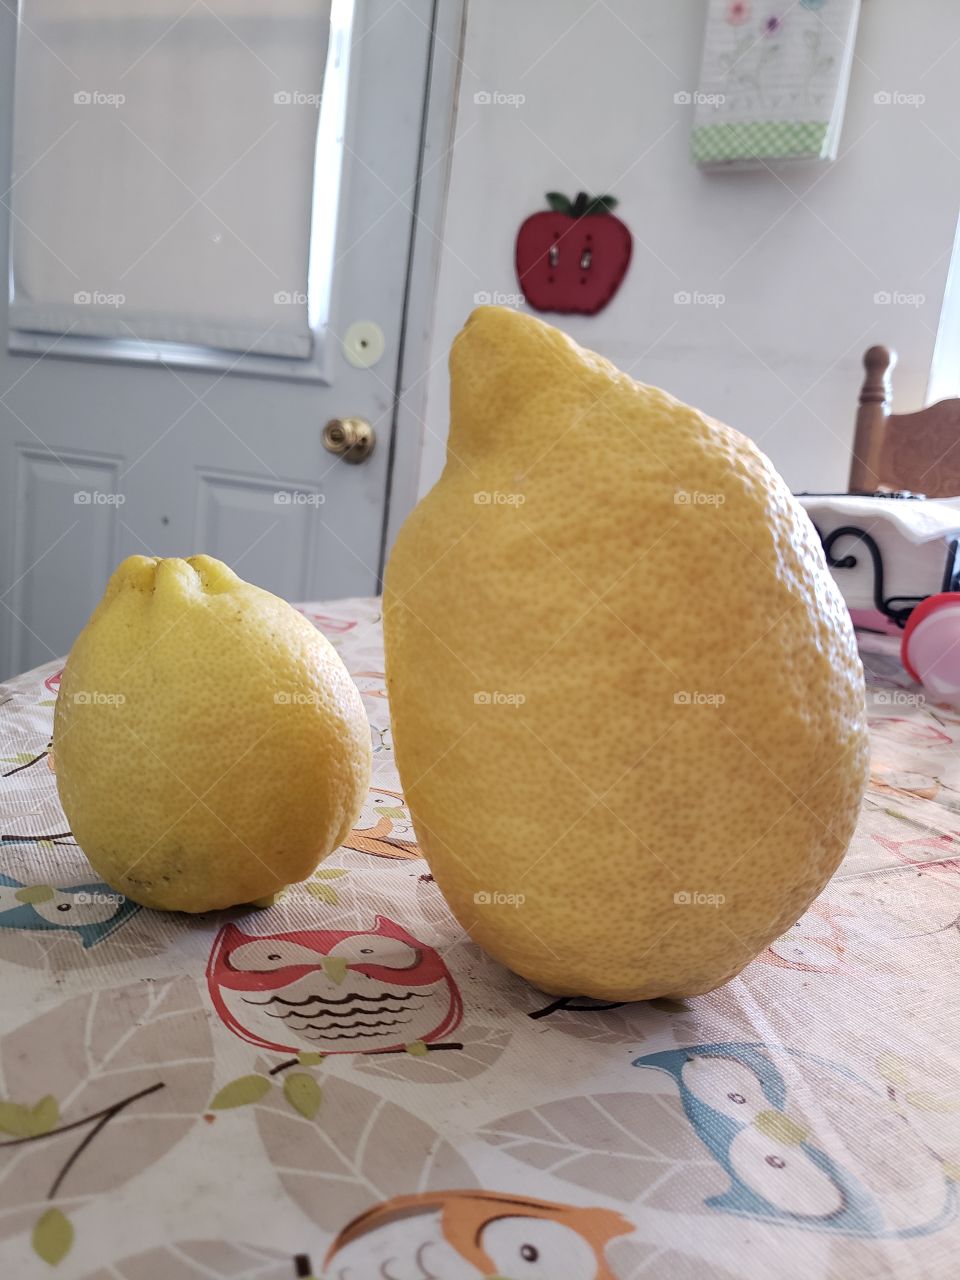 Big Lemon